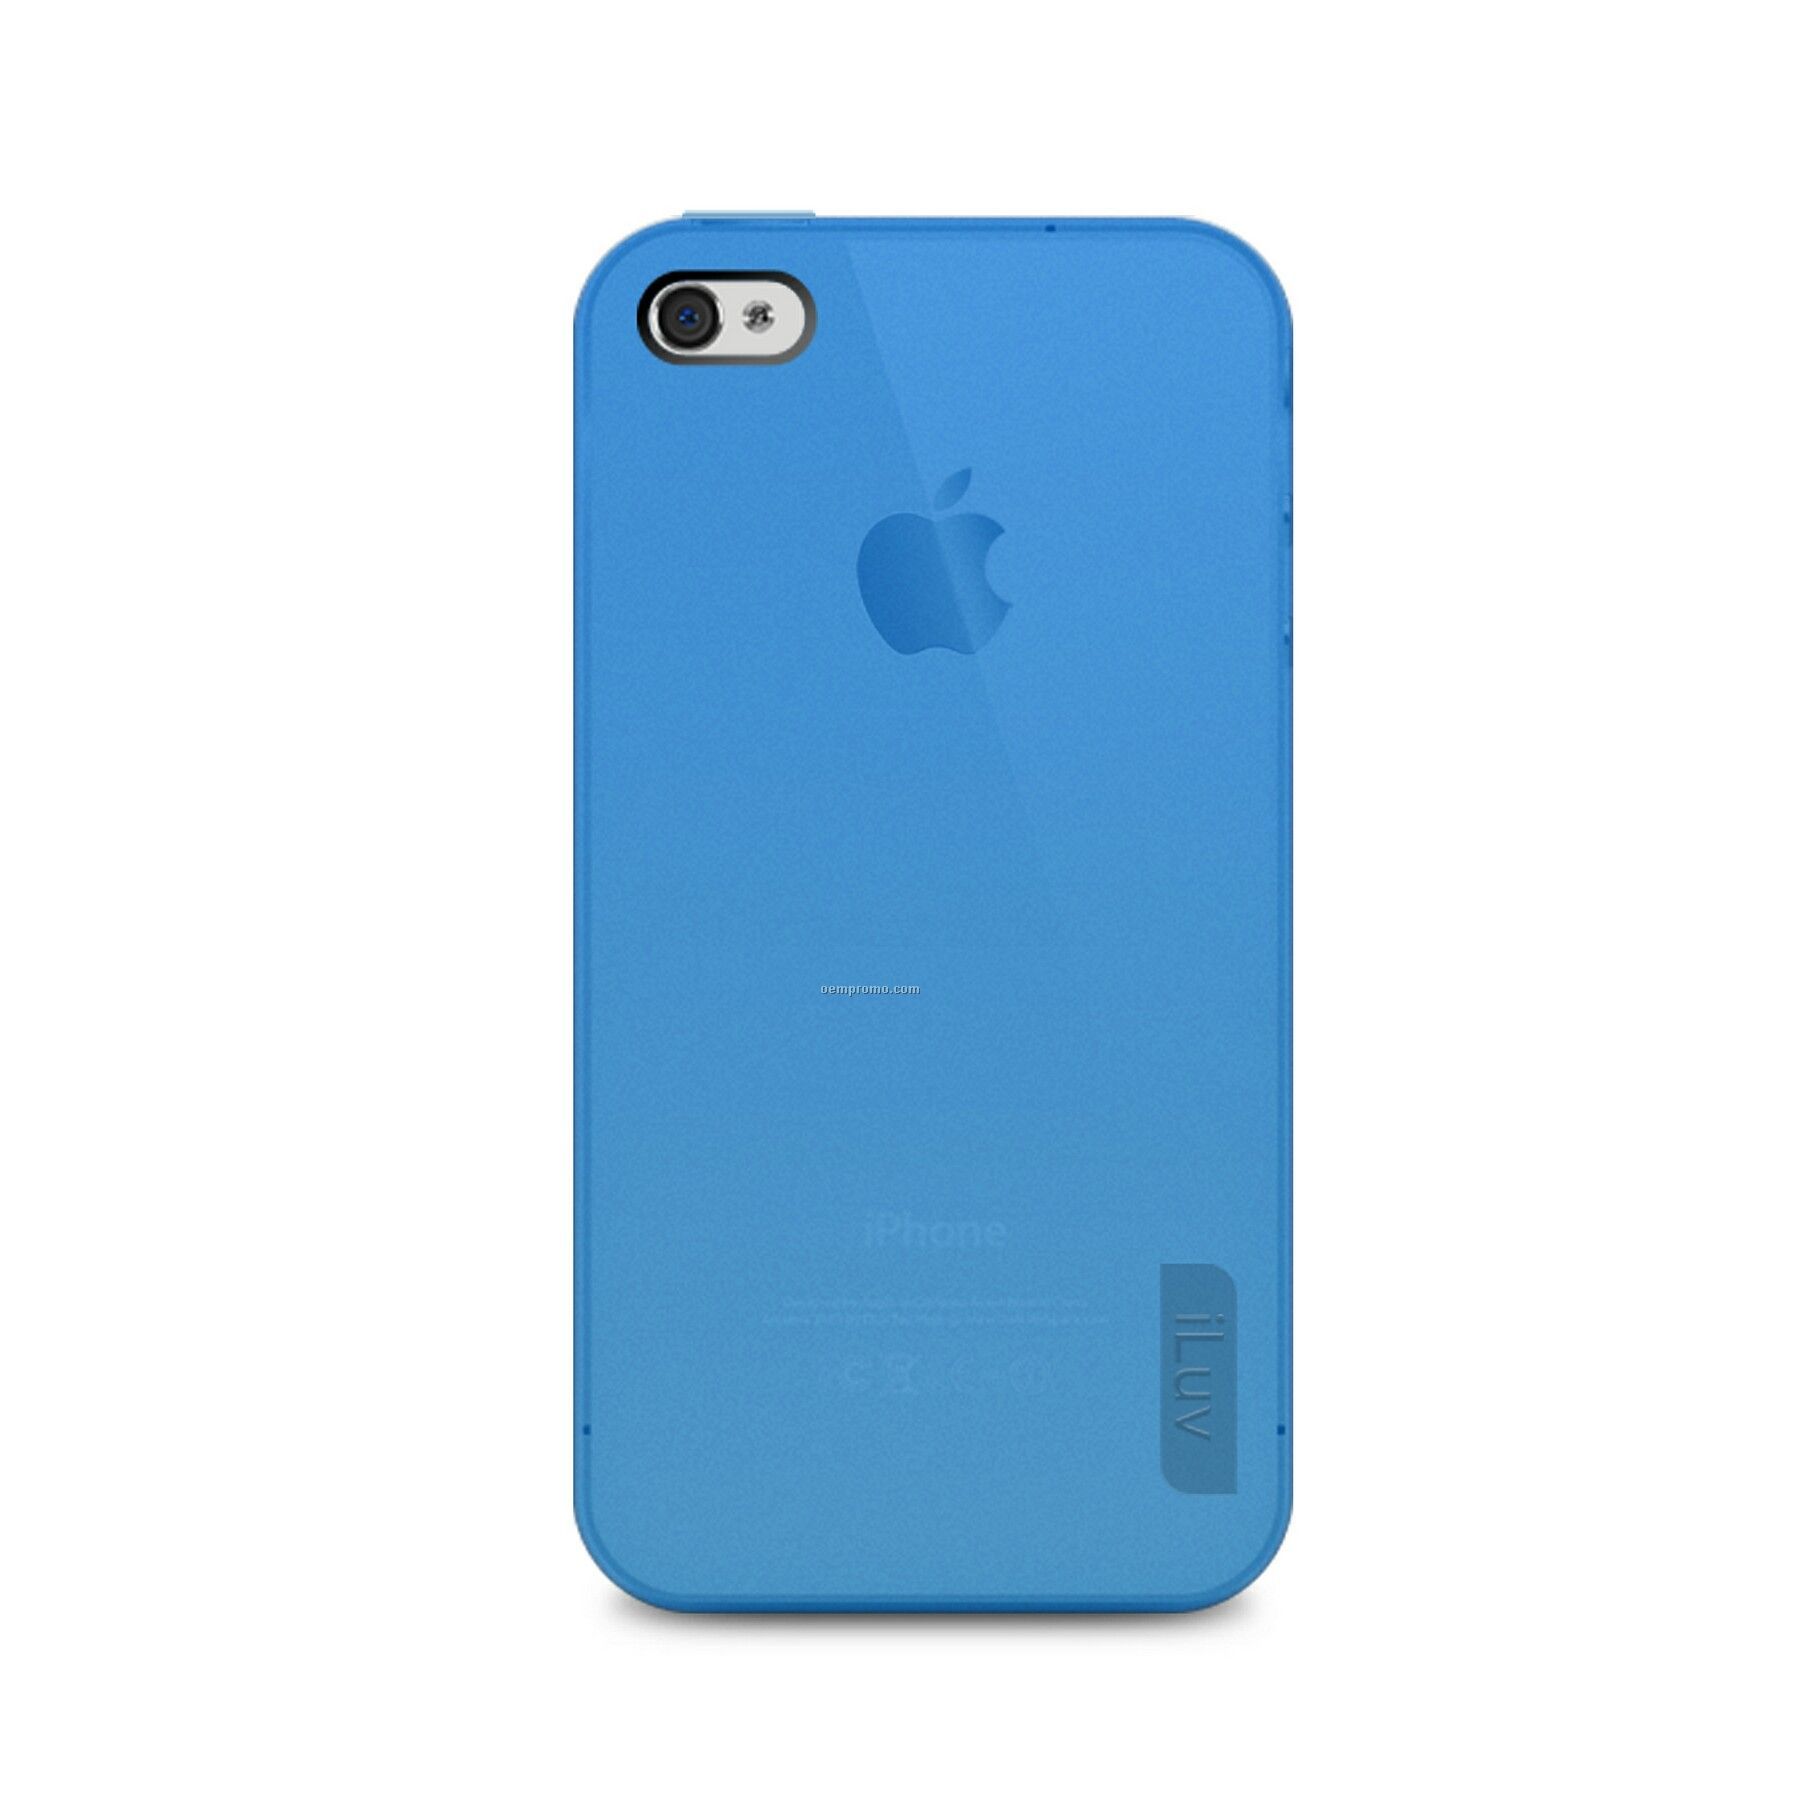 Iluv -flex-gel Case For Iphone 4 Cdma